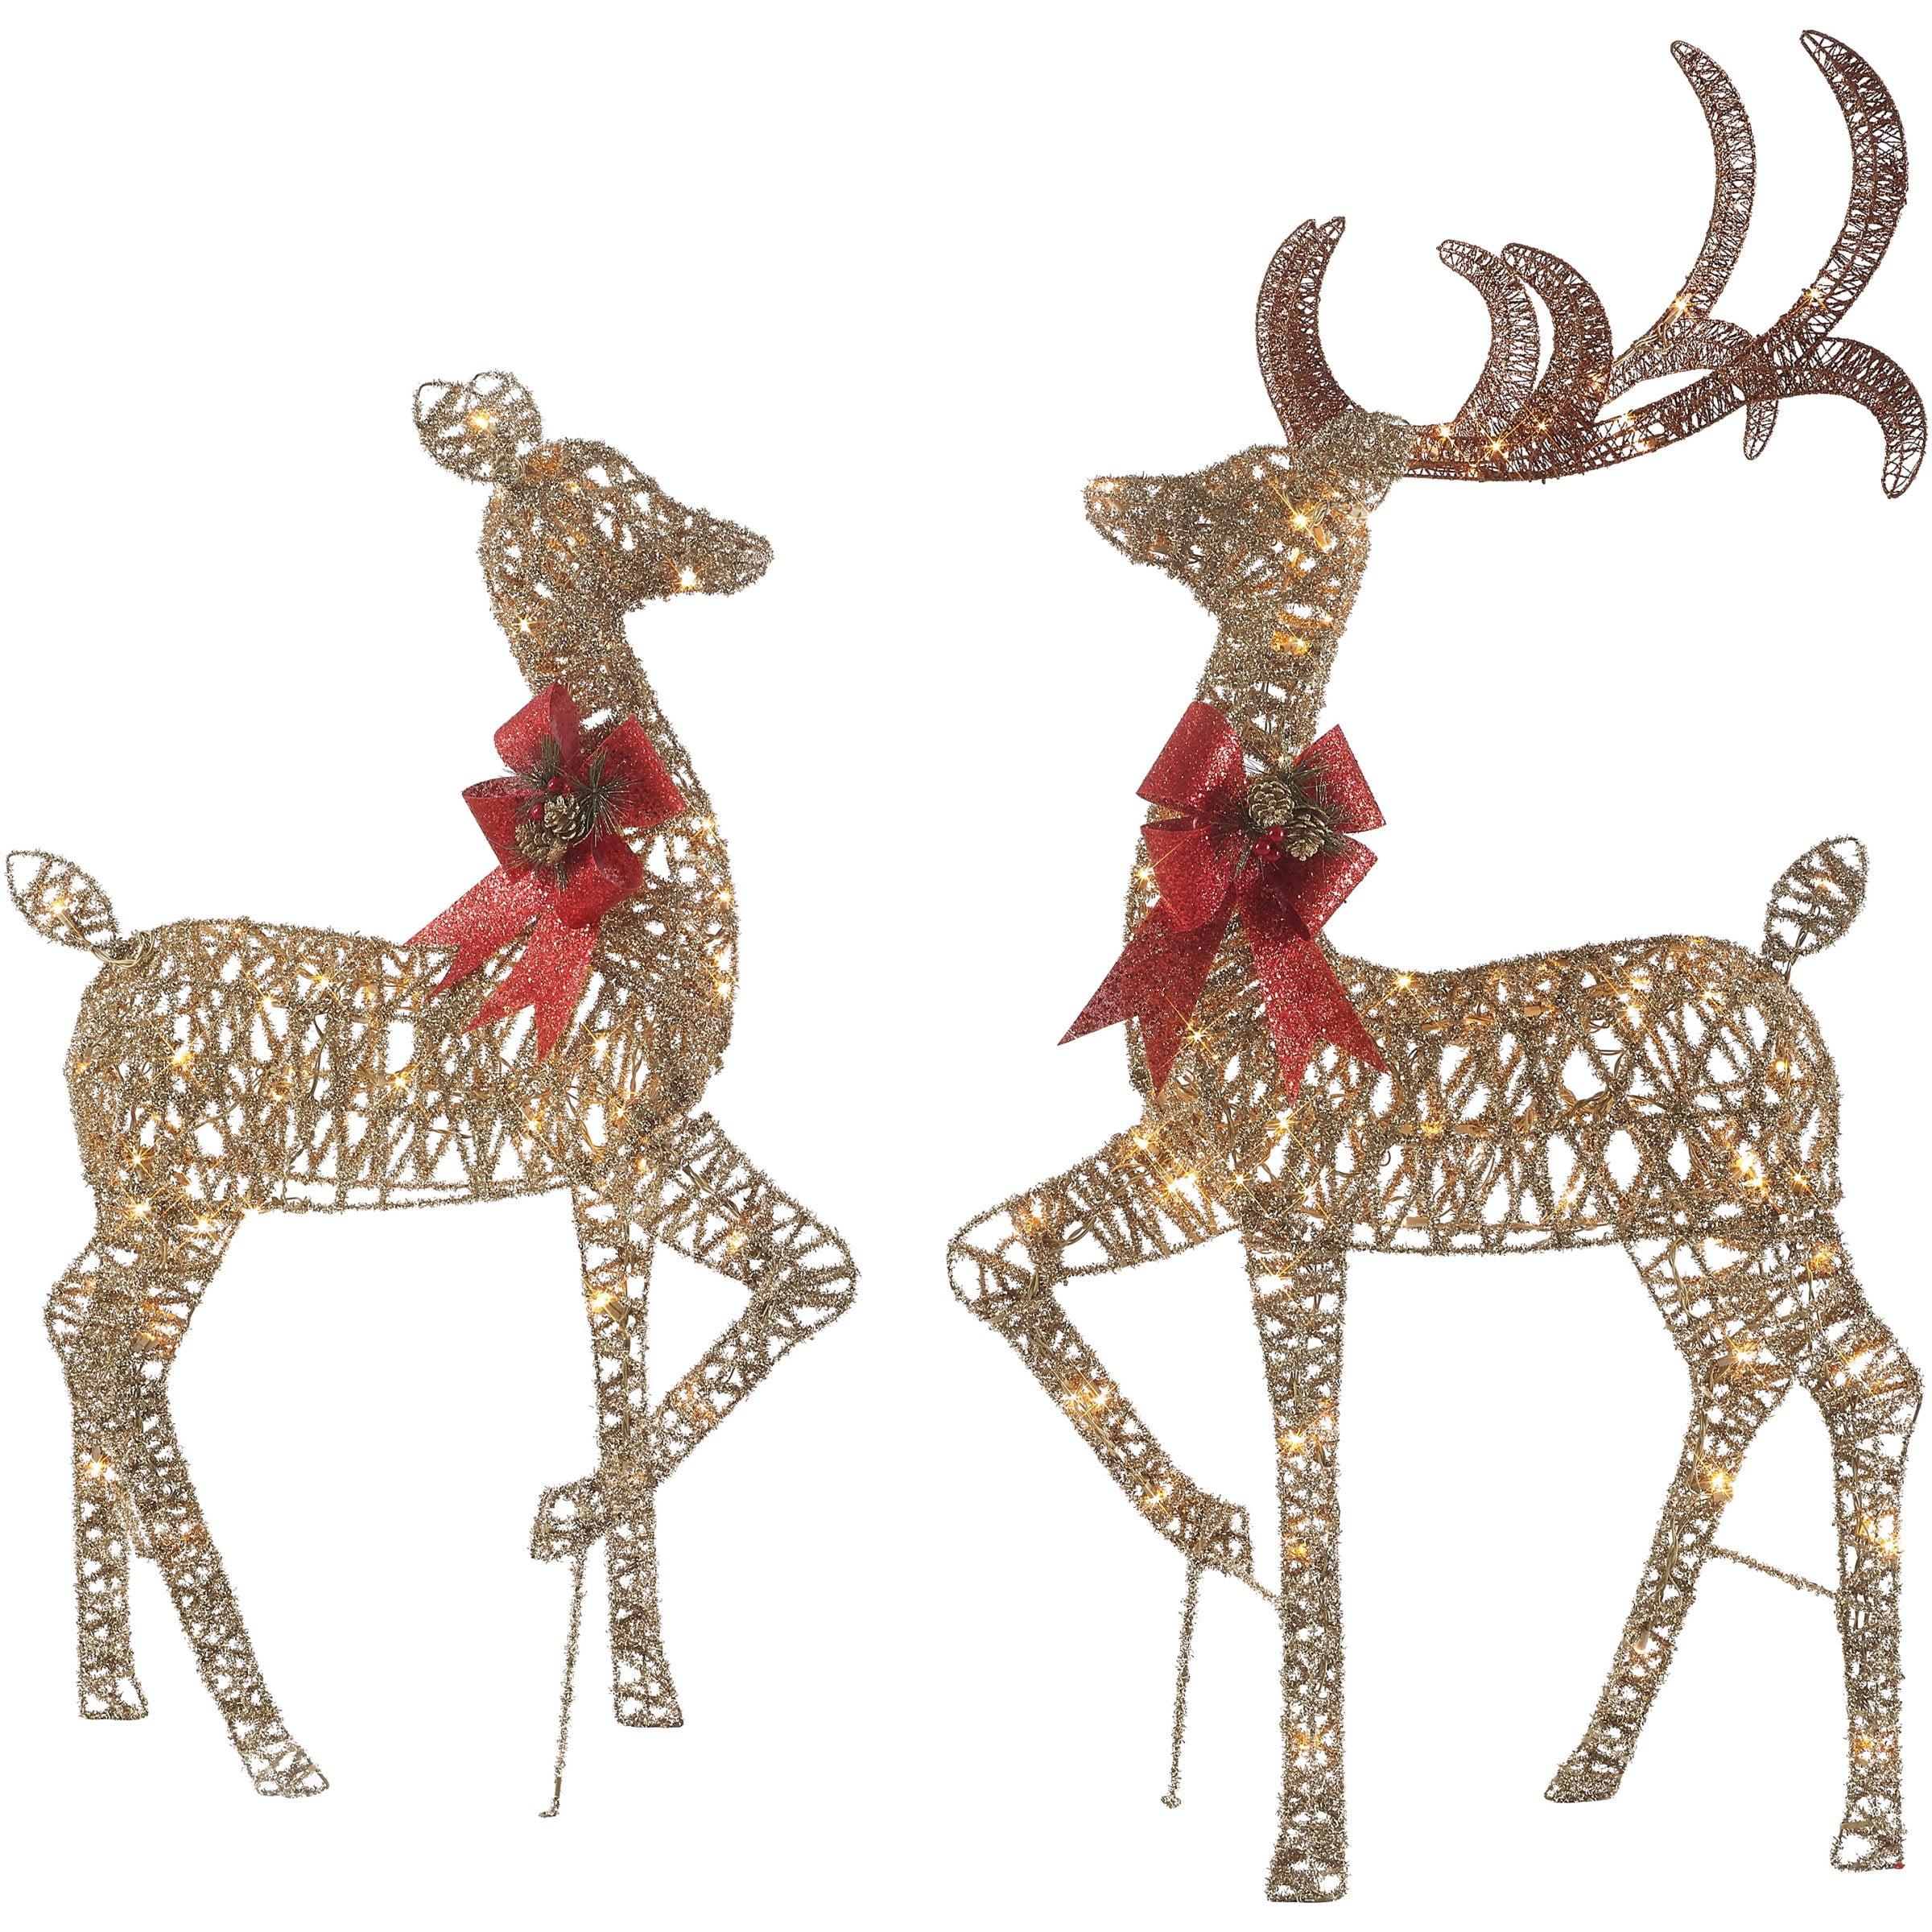 30 cm Acrylic Reindeer 24xled Timer Light Battery Christmas Winter Glow Animal